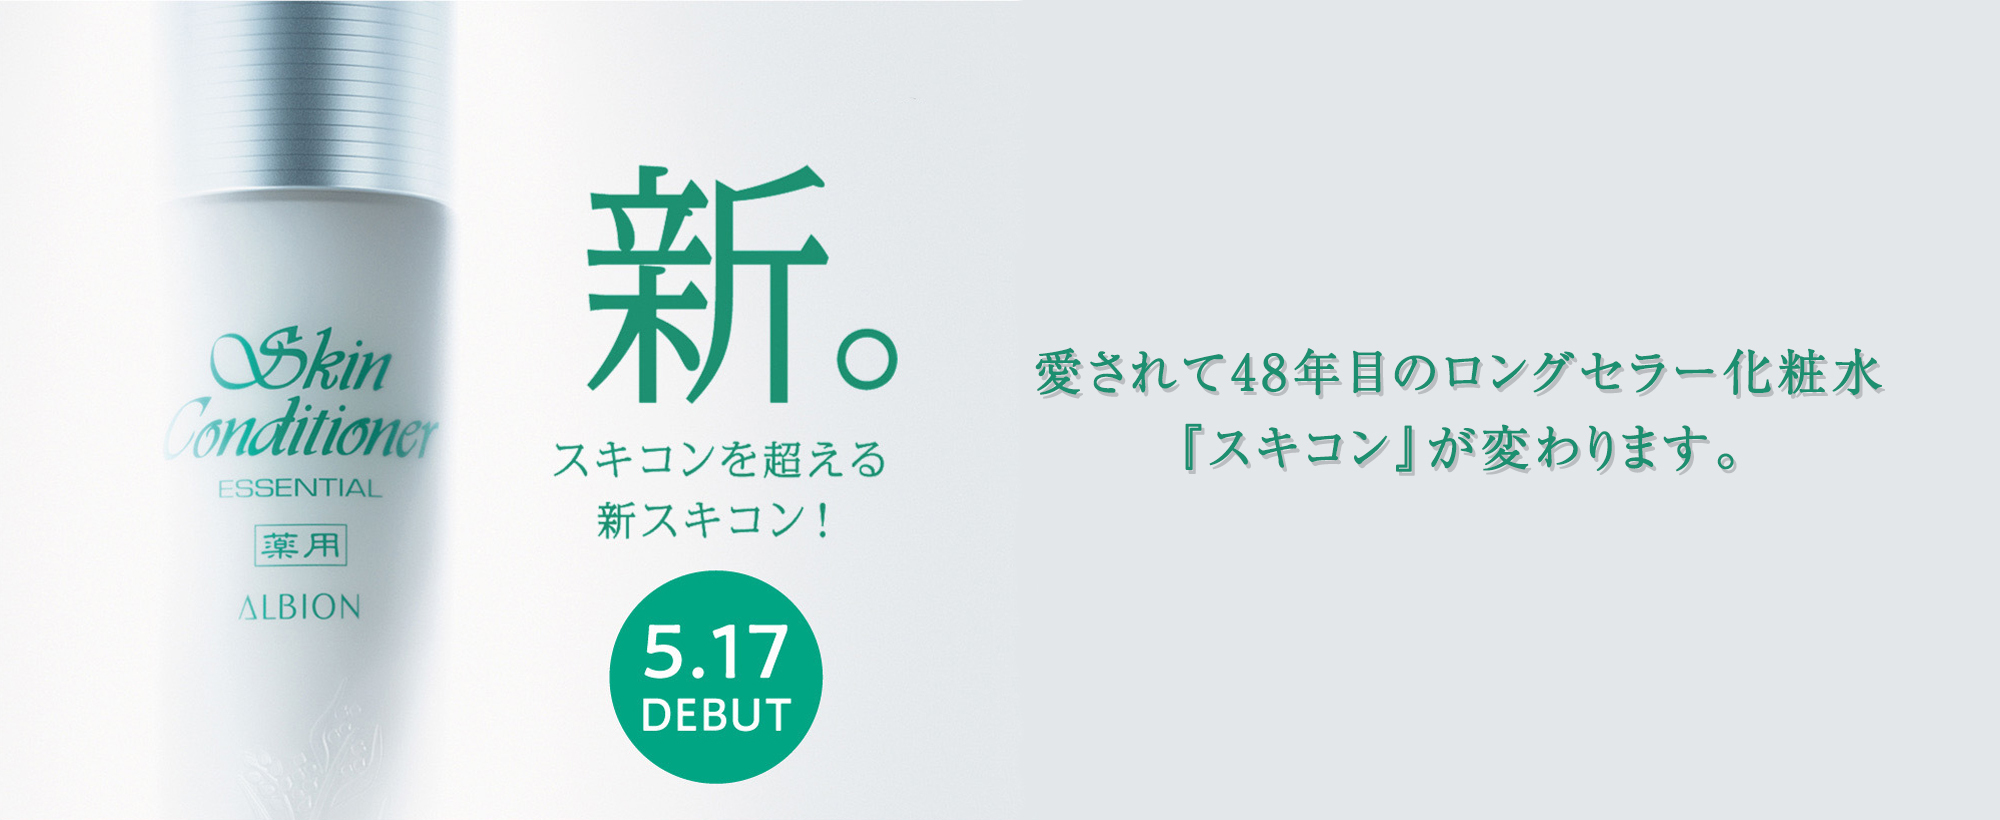 ALBION 新スキンコンディショナー 2022.05.17 DEBUT! | Perfumerie Sukiya[パフューマリースキヤ]